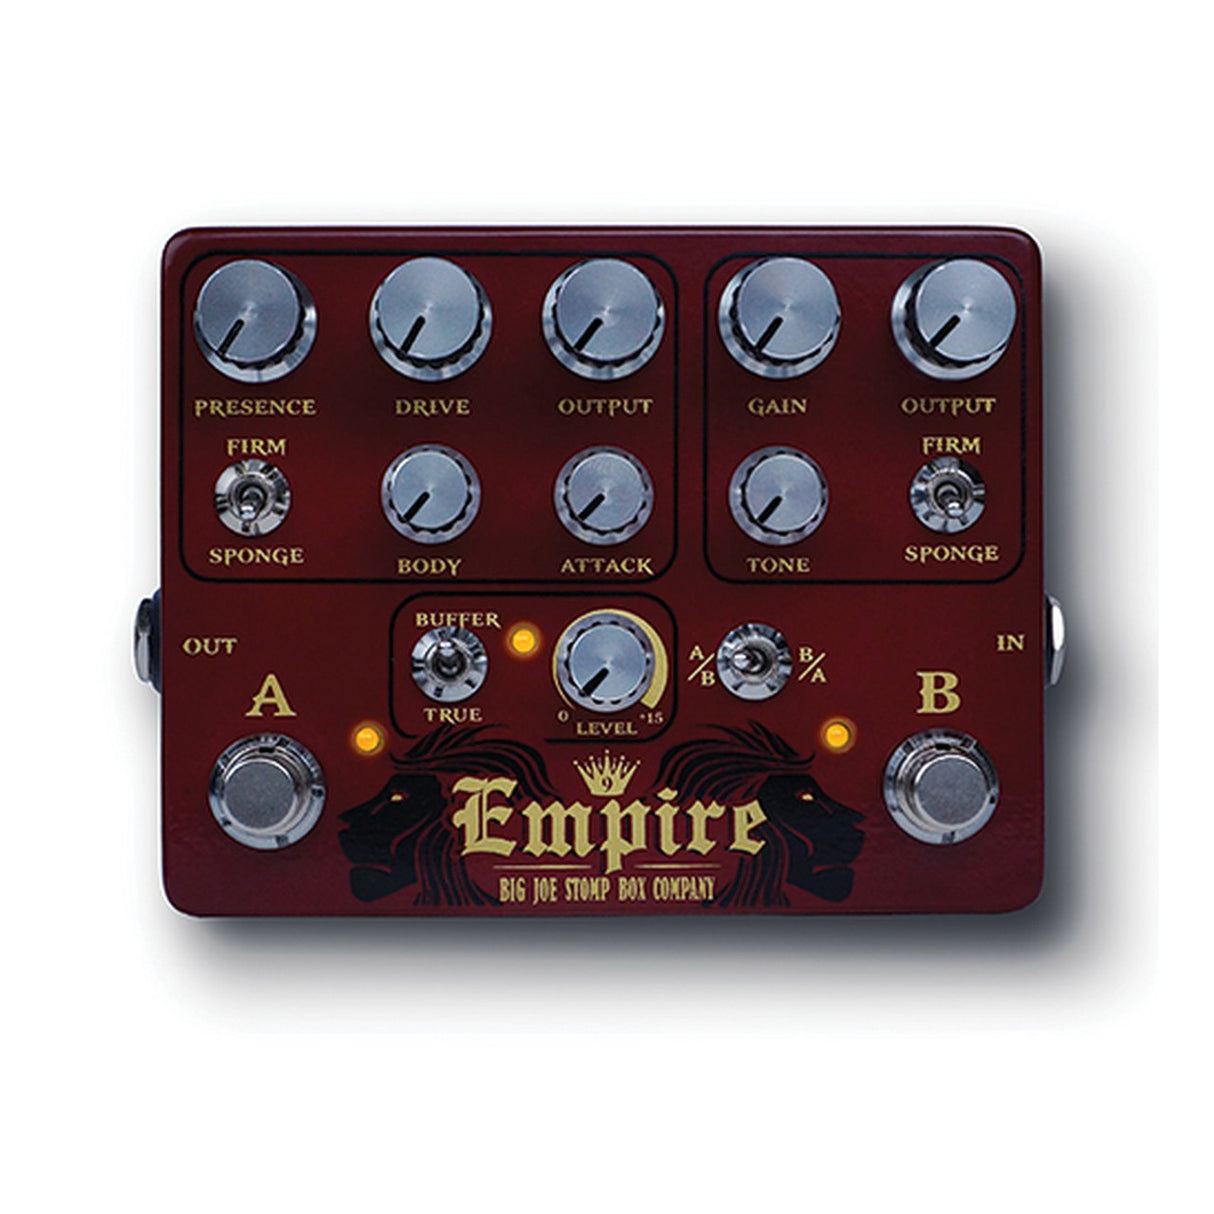 Big Joe Stomp Box Company Empire B-502 | Big Joe Series Dual Pre Amp Overdrive Guitar Pedal